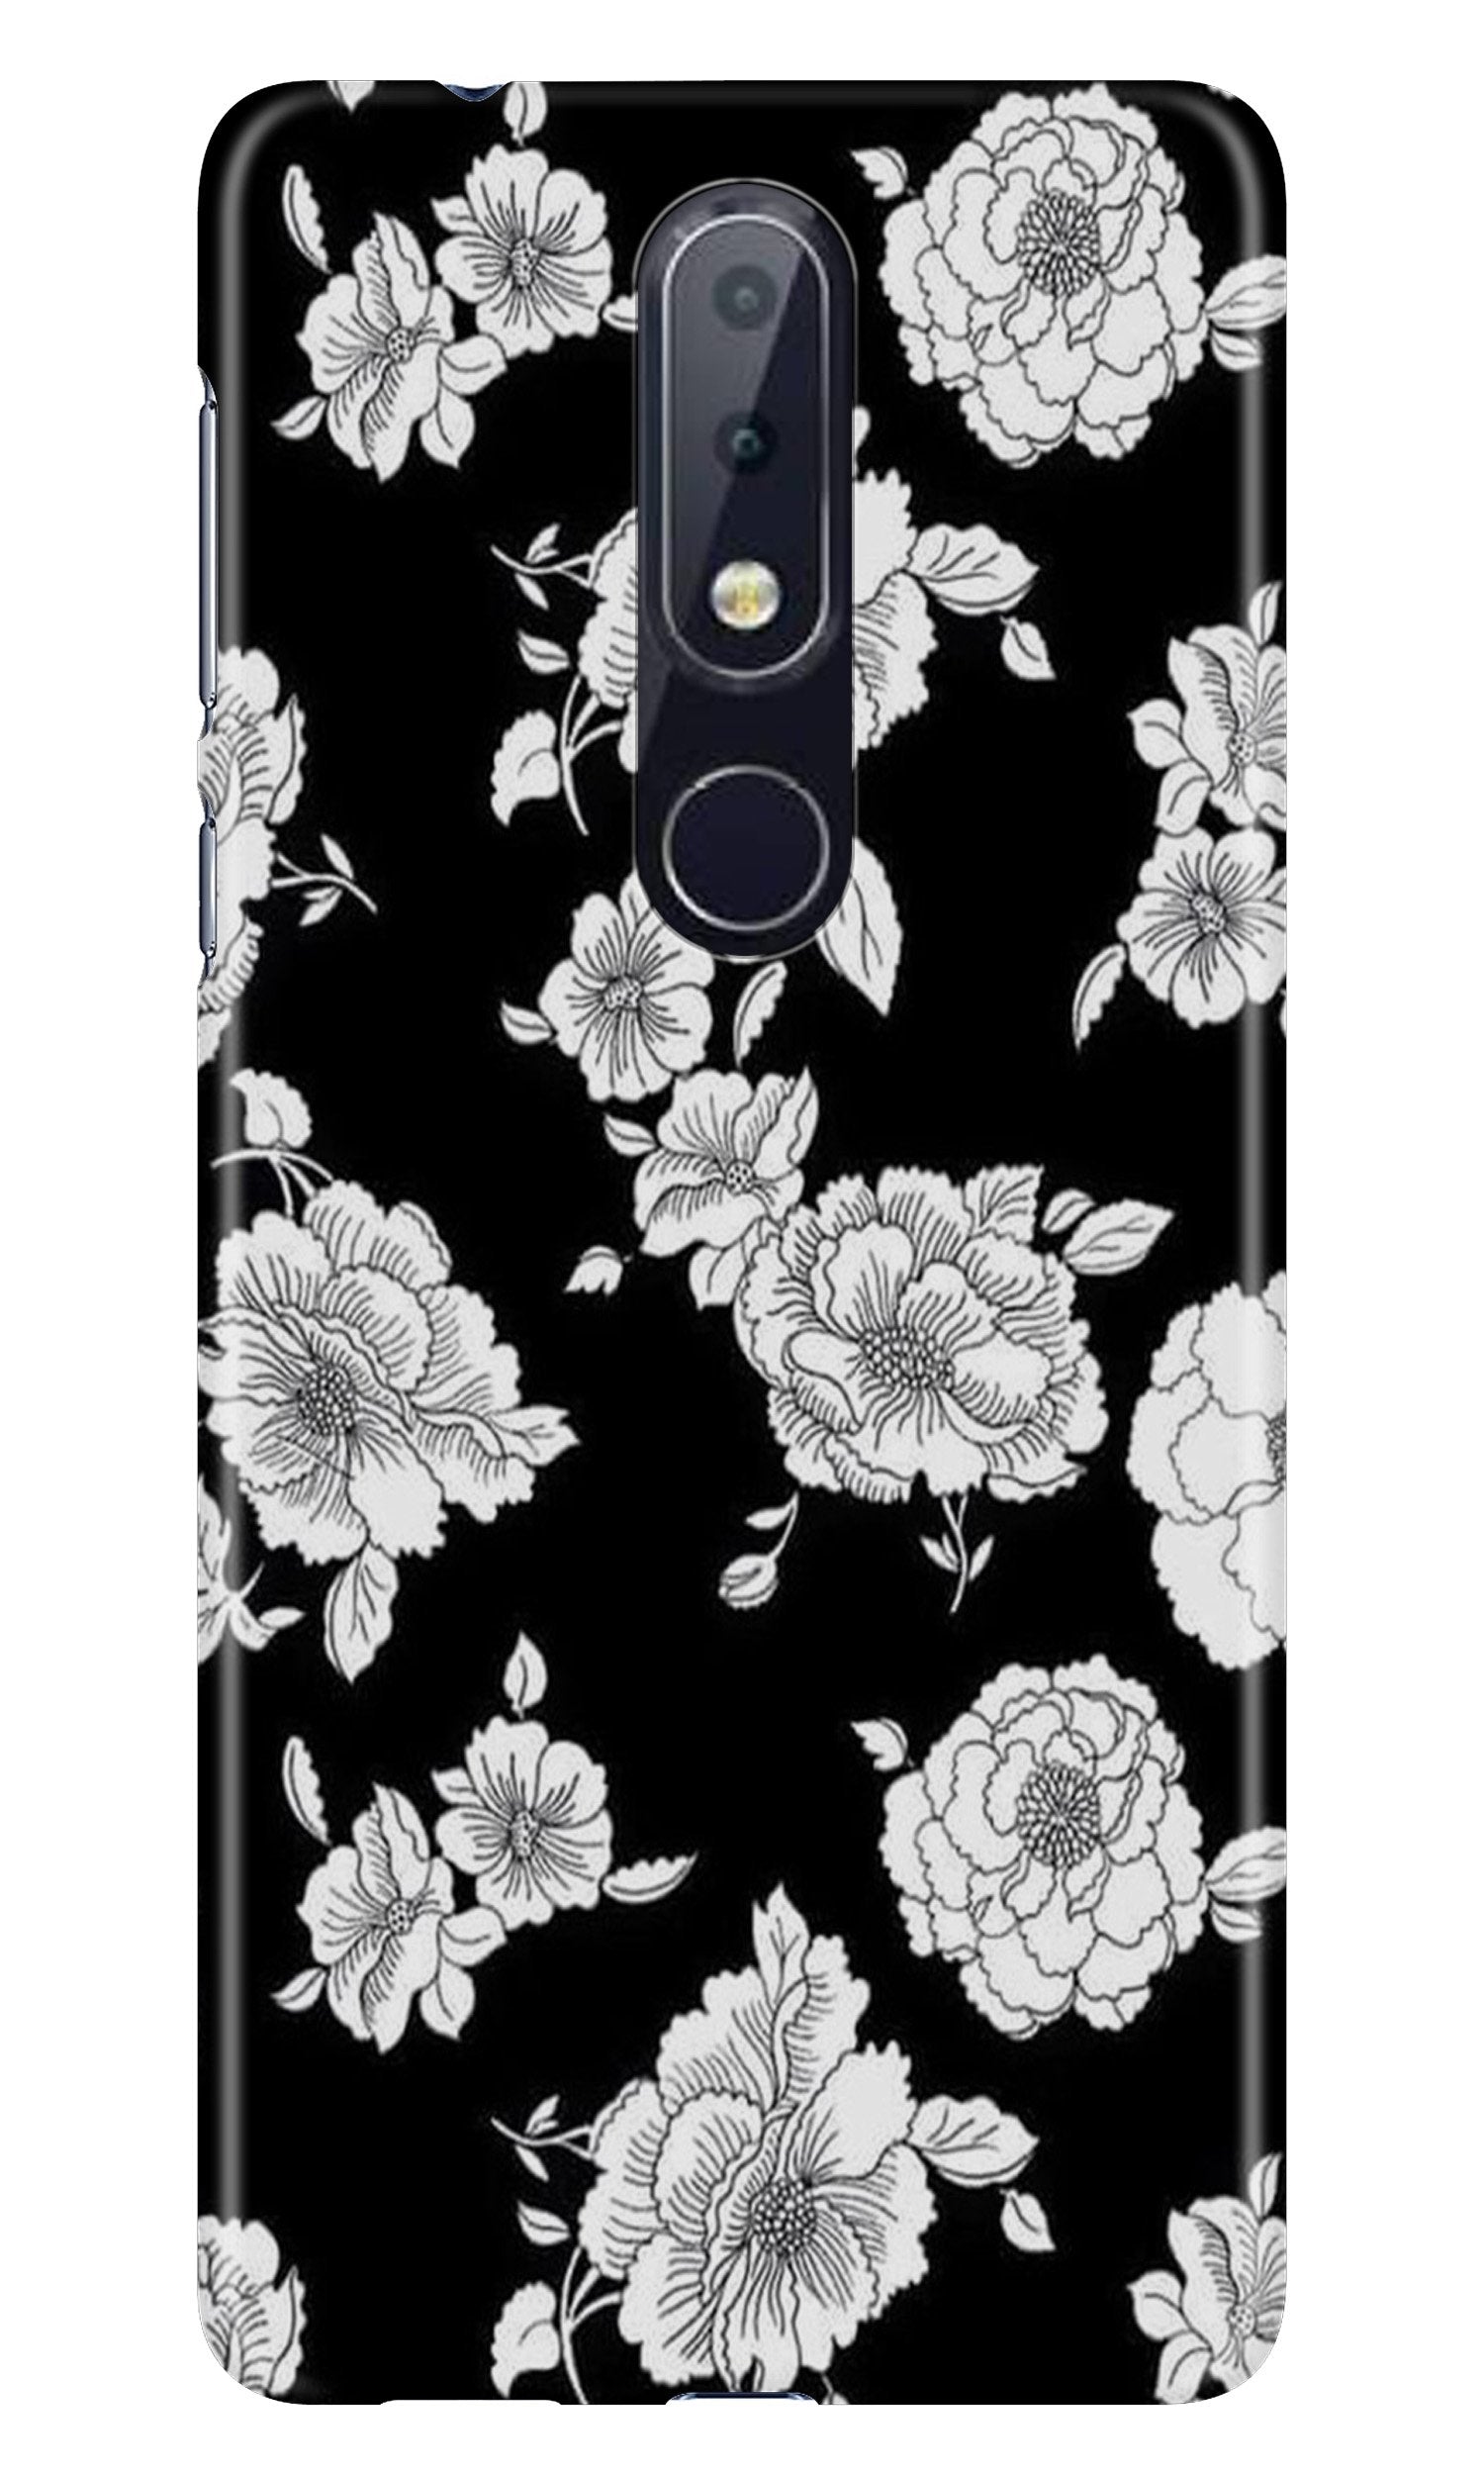 White flowers Black Background Case for Nokia 6.1 Plus